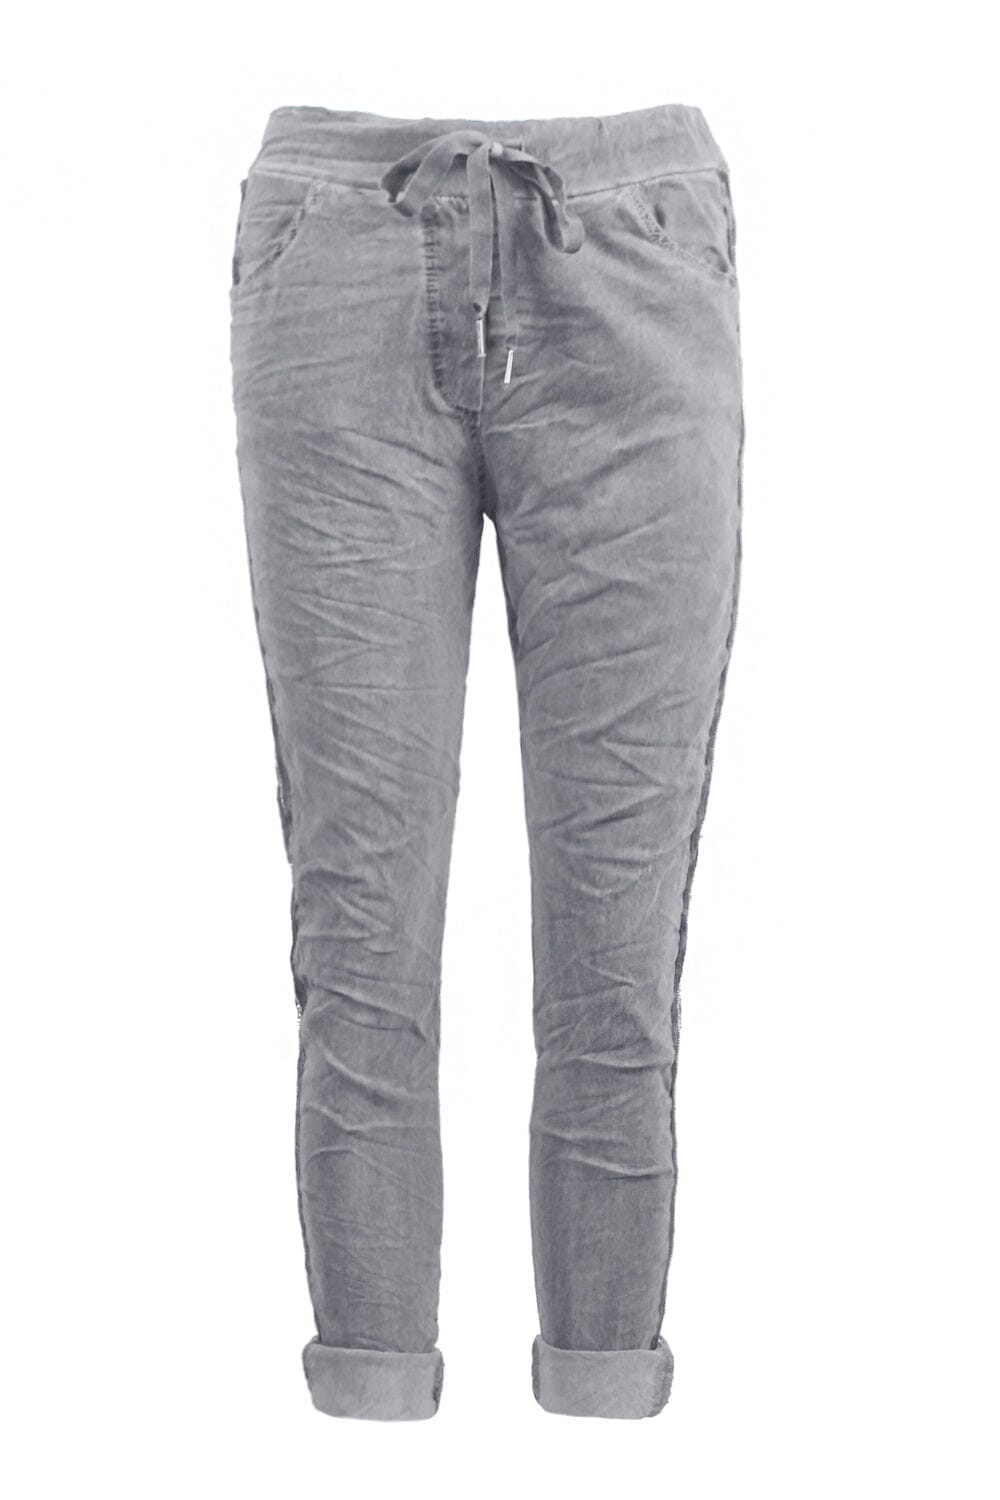 Rhinestone Side Stripe Crinkle Jogger Grey Pants